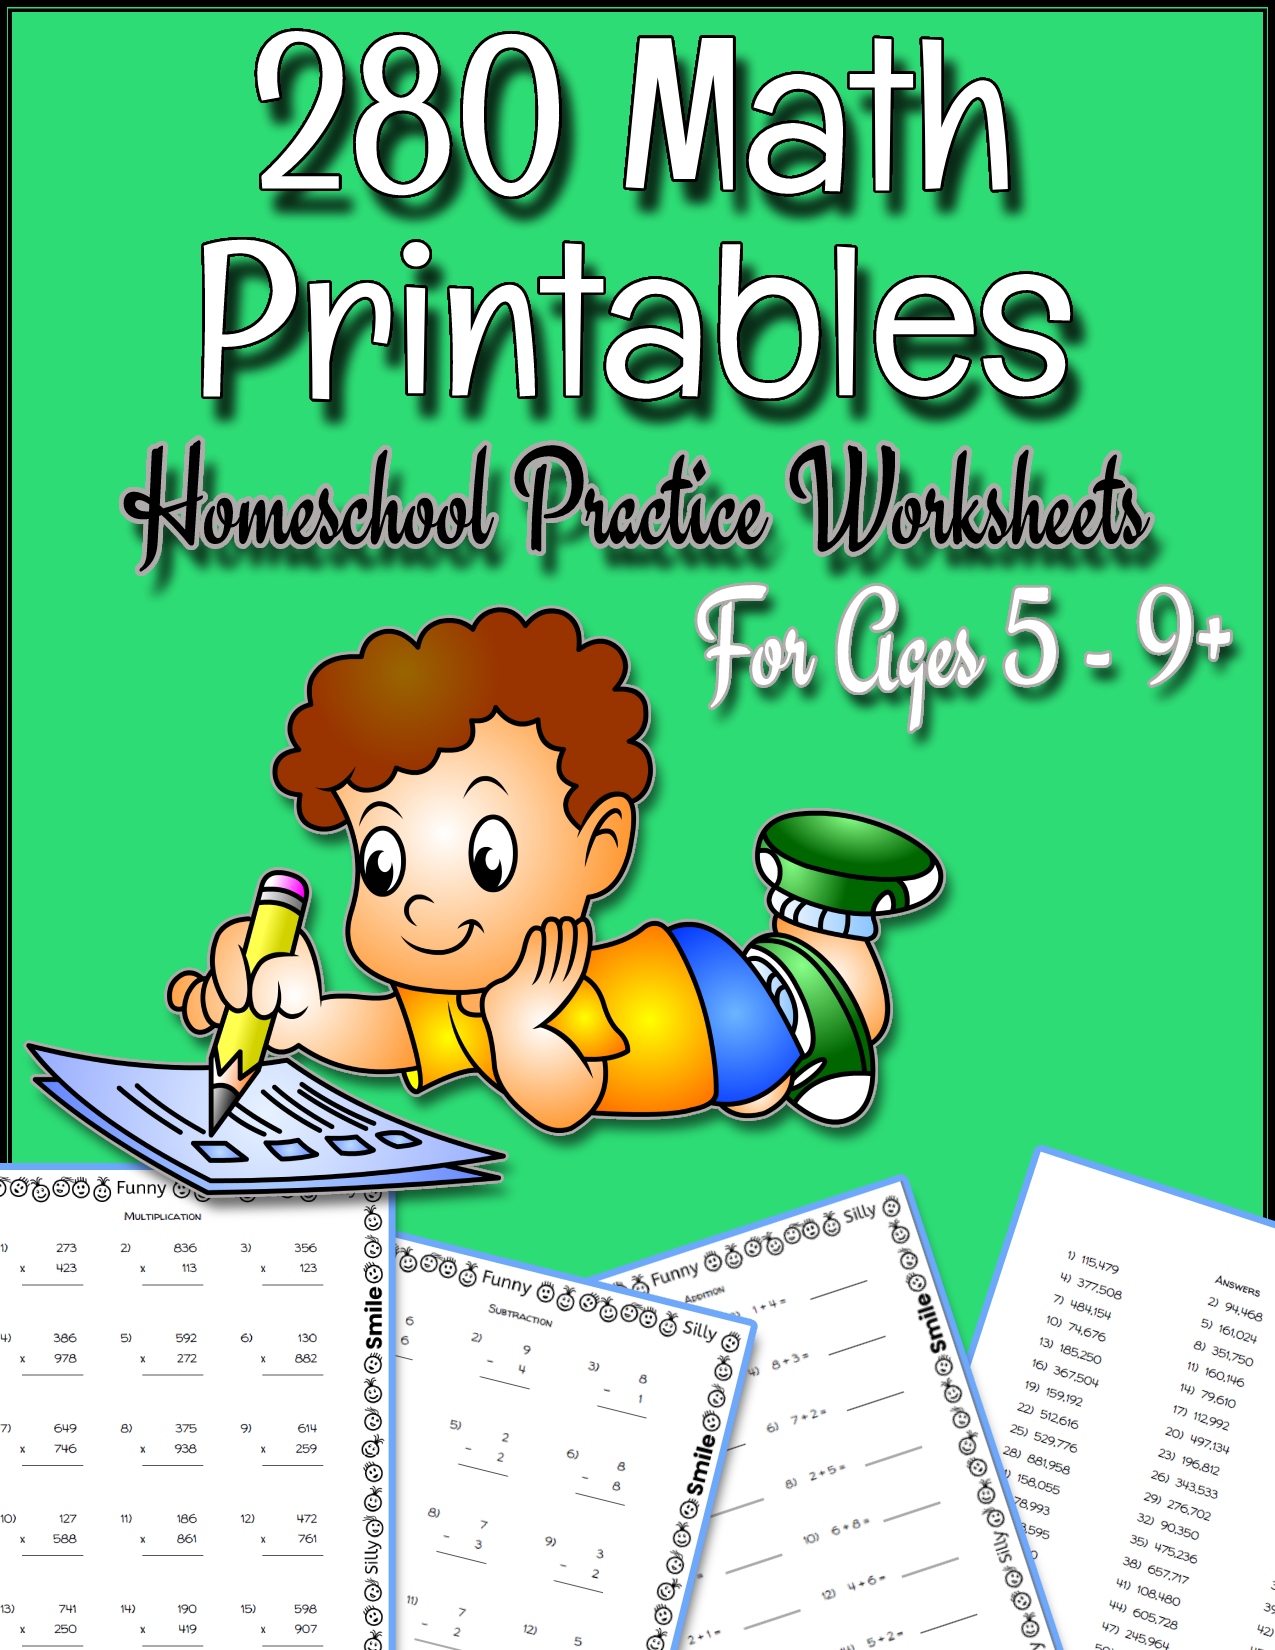 kids-math-level-1-addition-280-printable-homeschool-practice